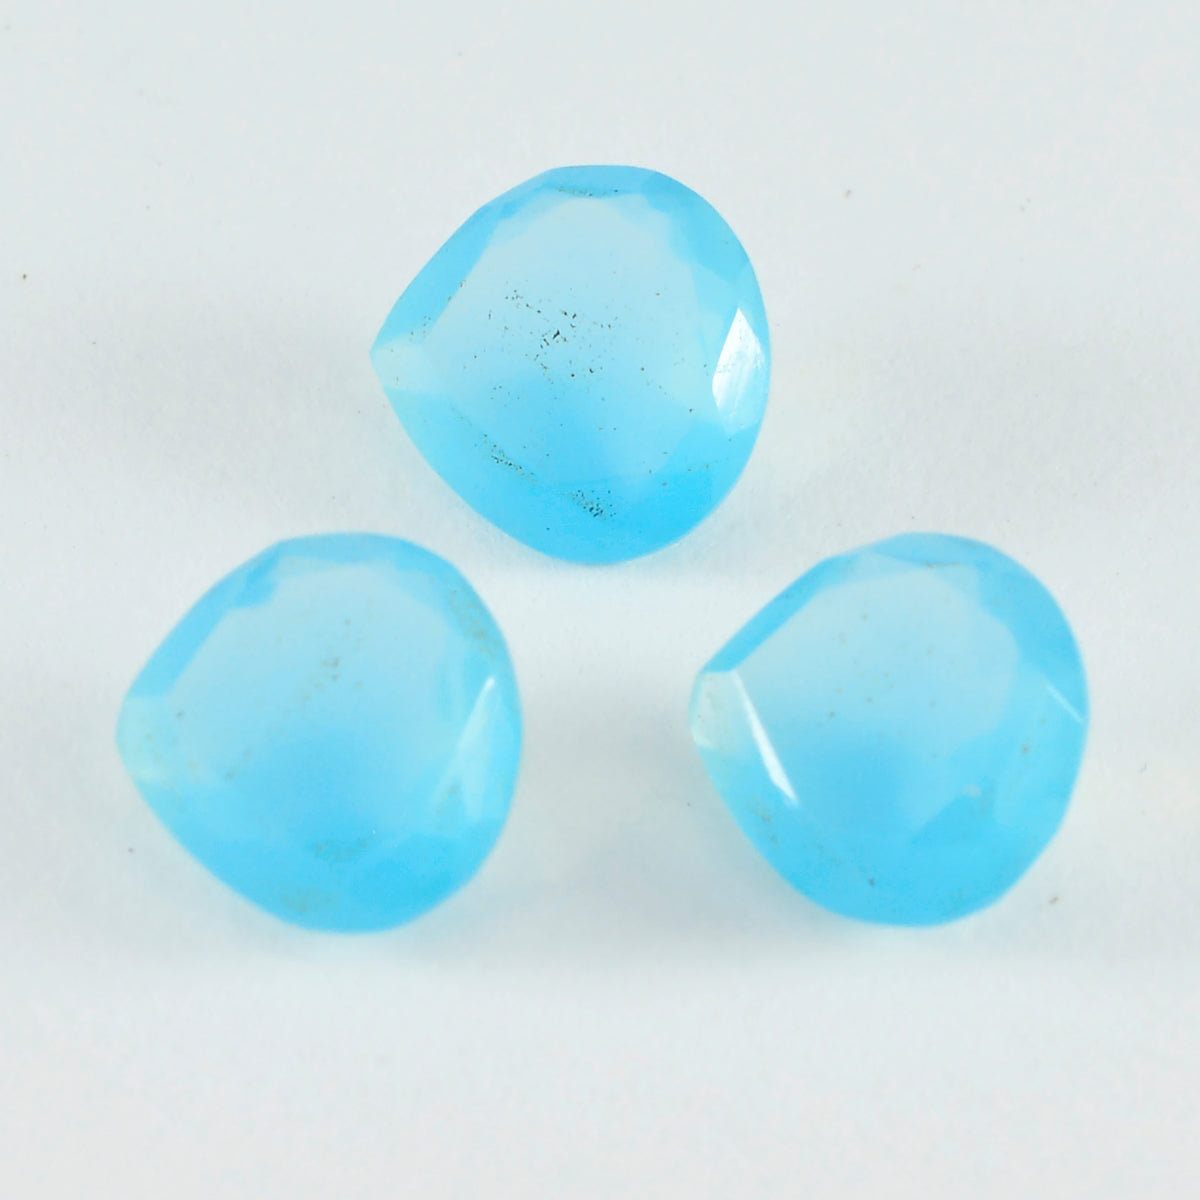 Riyogems 1PC Genuine Aqua Chalcedony Faceted 11x11 mm Heart Shape sweet Quality Loose Gemstone